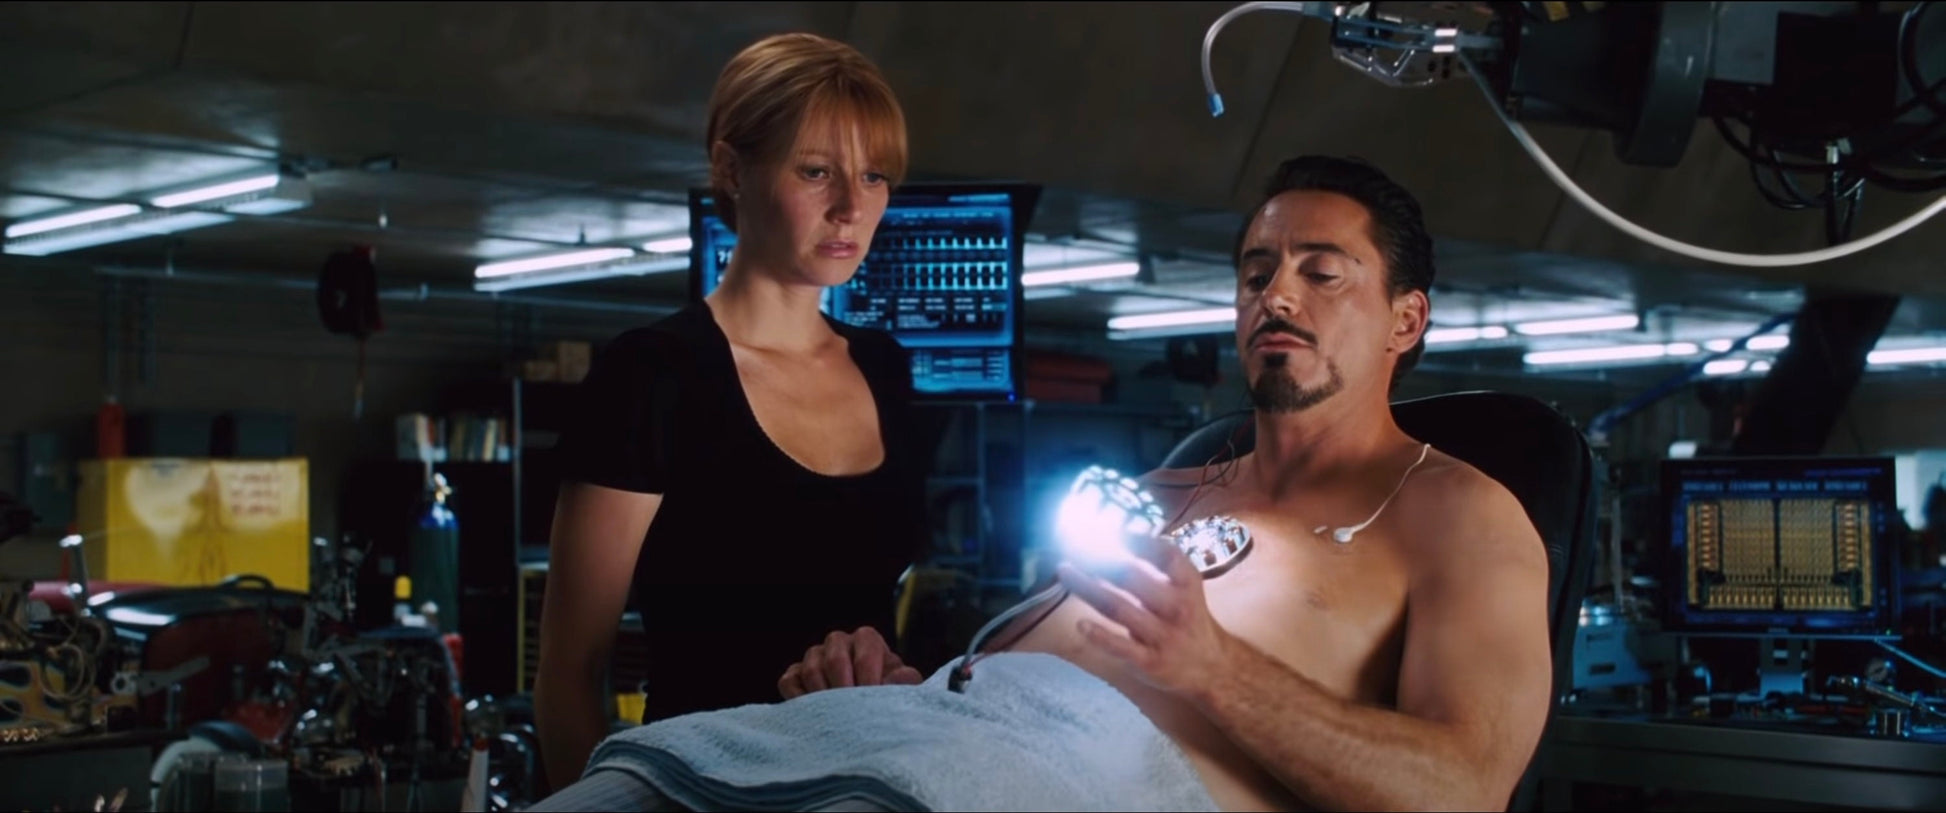 Iron Man Arc Reactor Prop Replica Tony Stark Has a Heart Cosplay - LIGHTS UP!